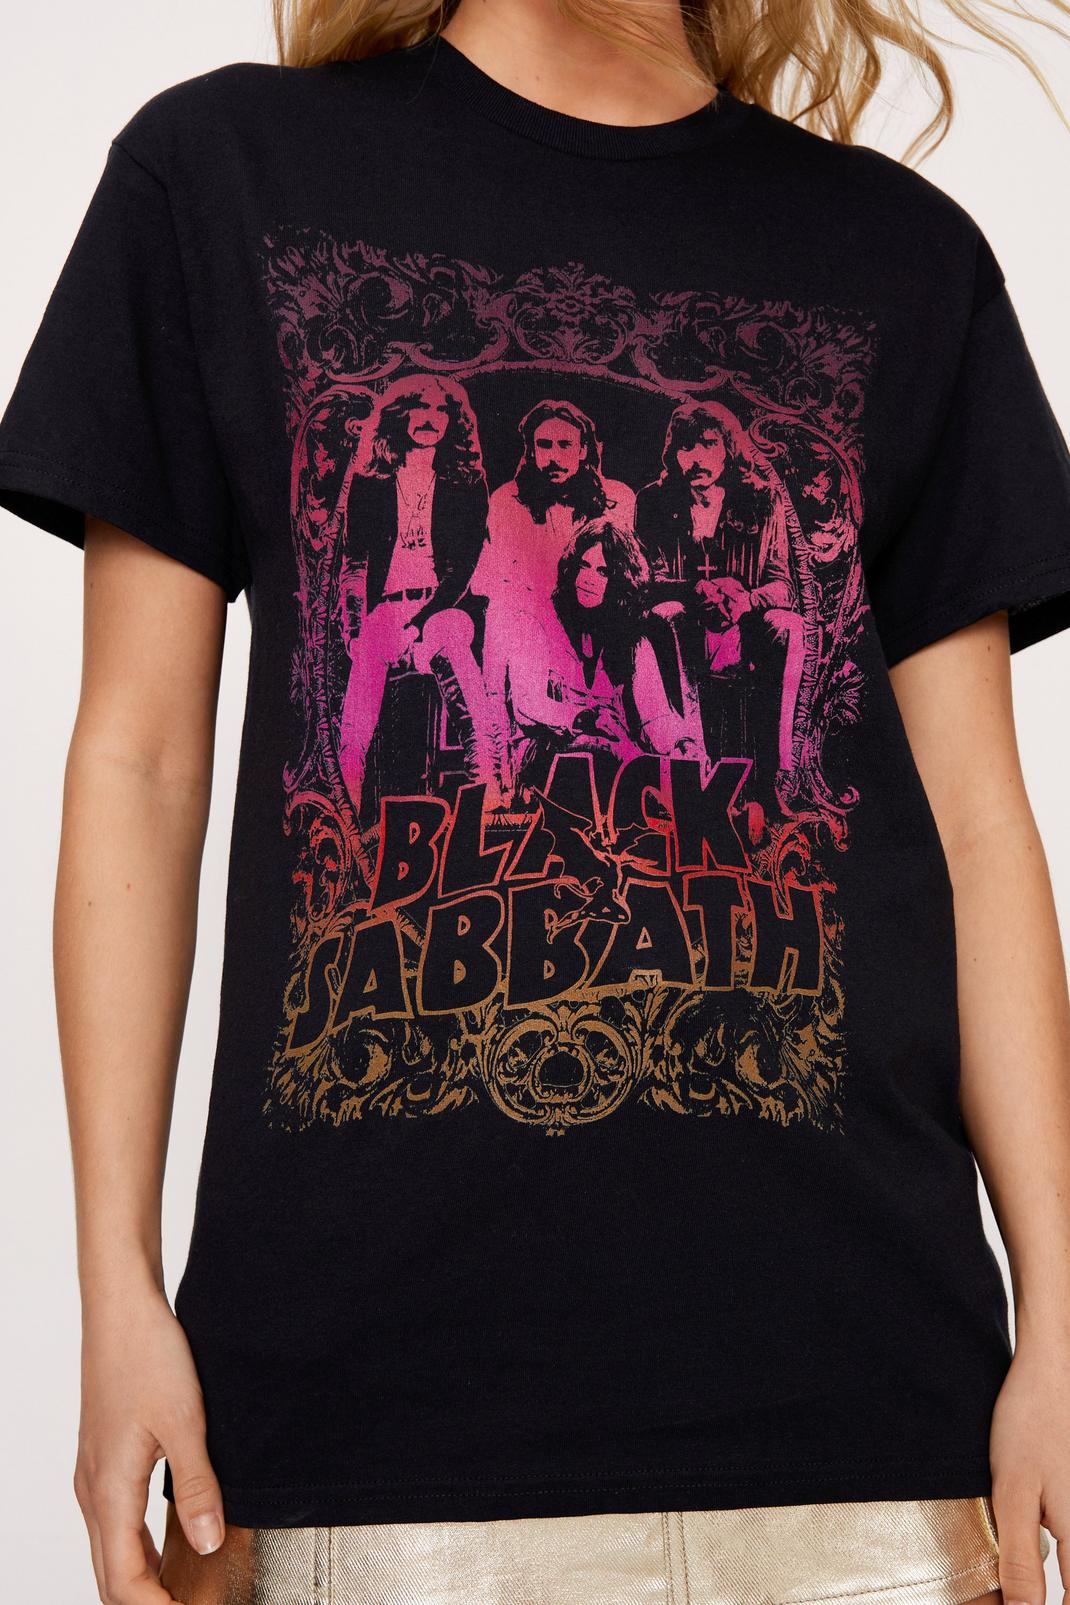 Black Sabbath Oversized Graphic Band T-shirt image number 1